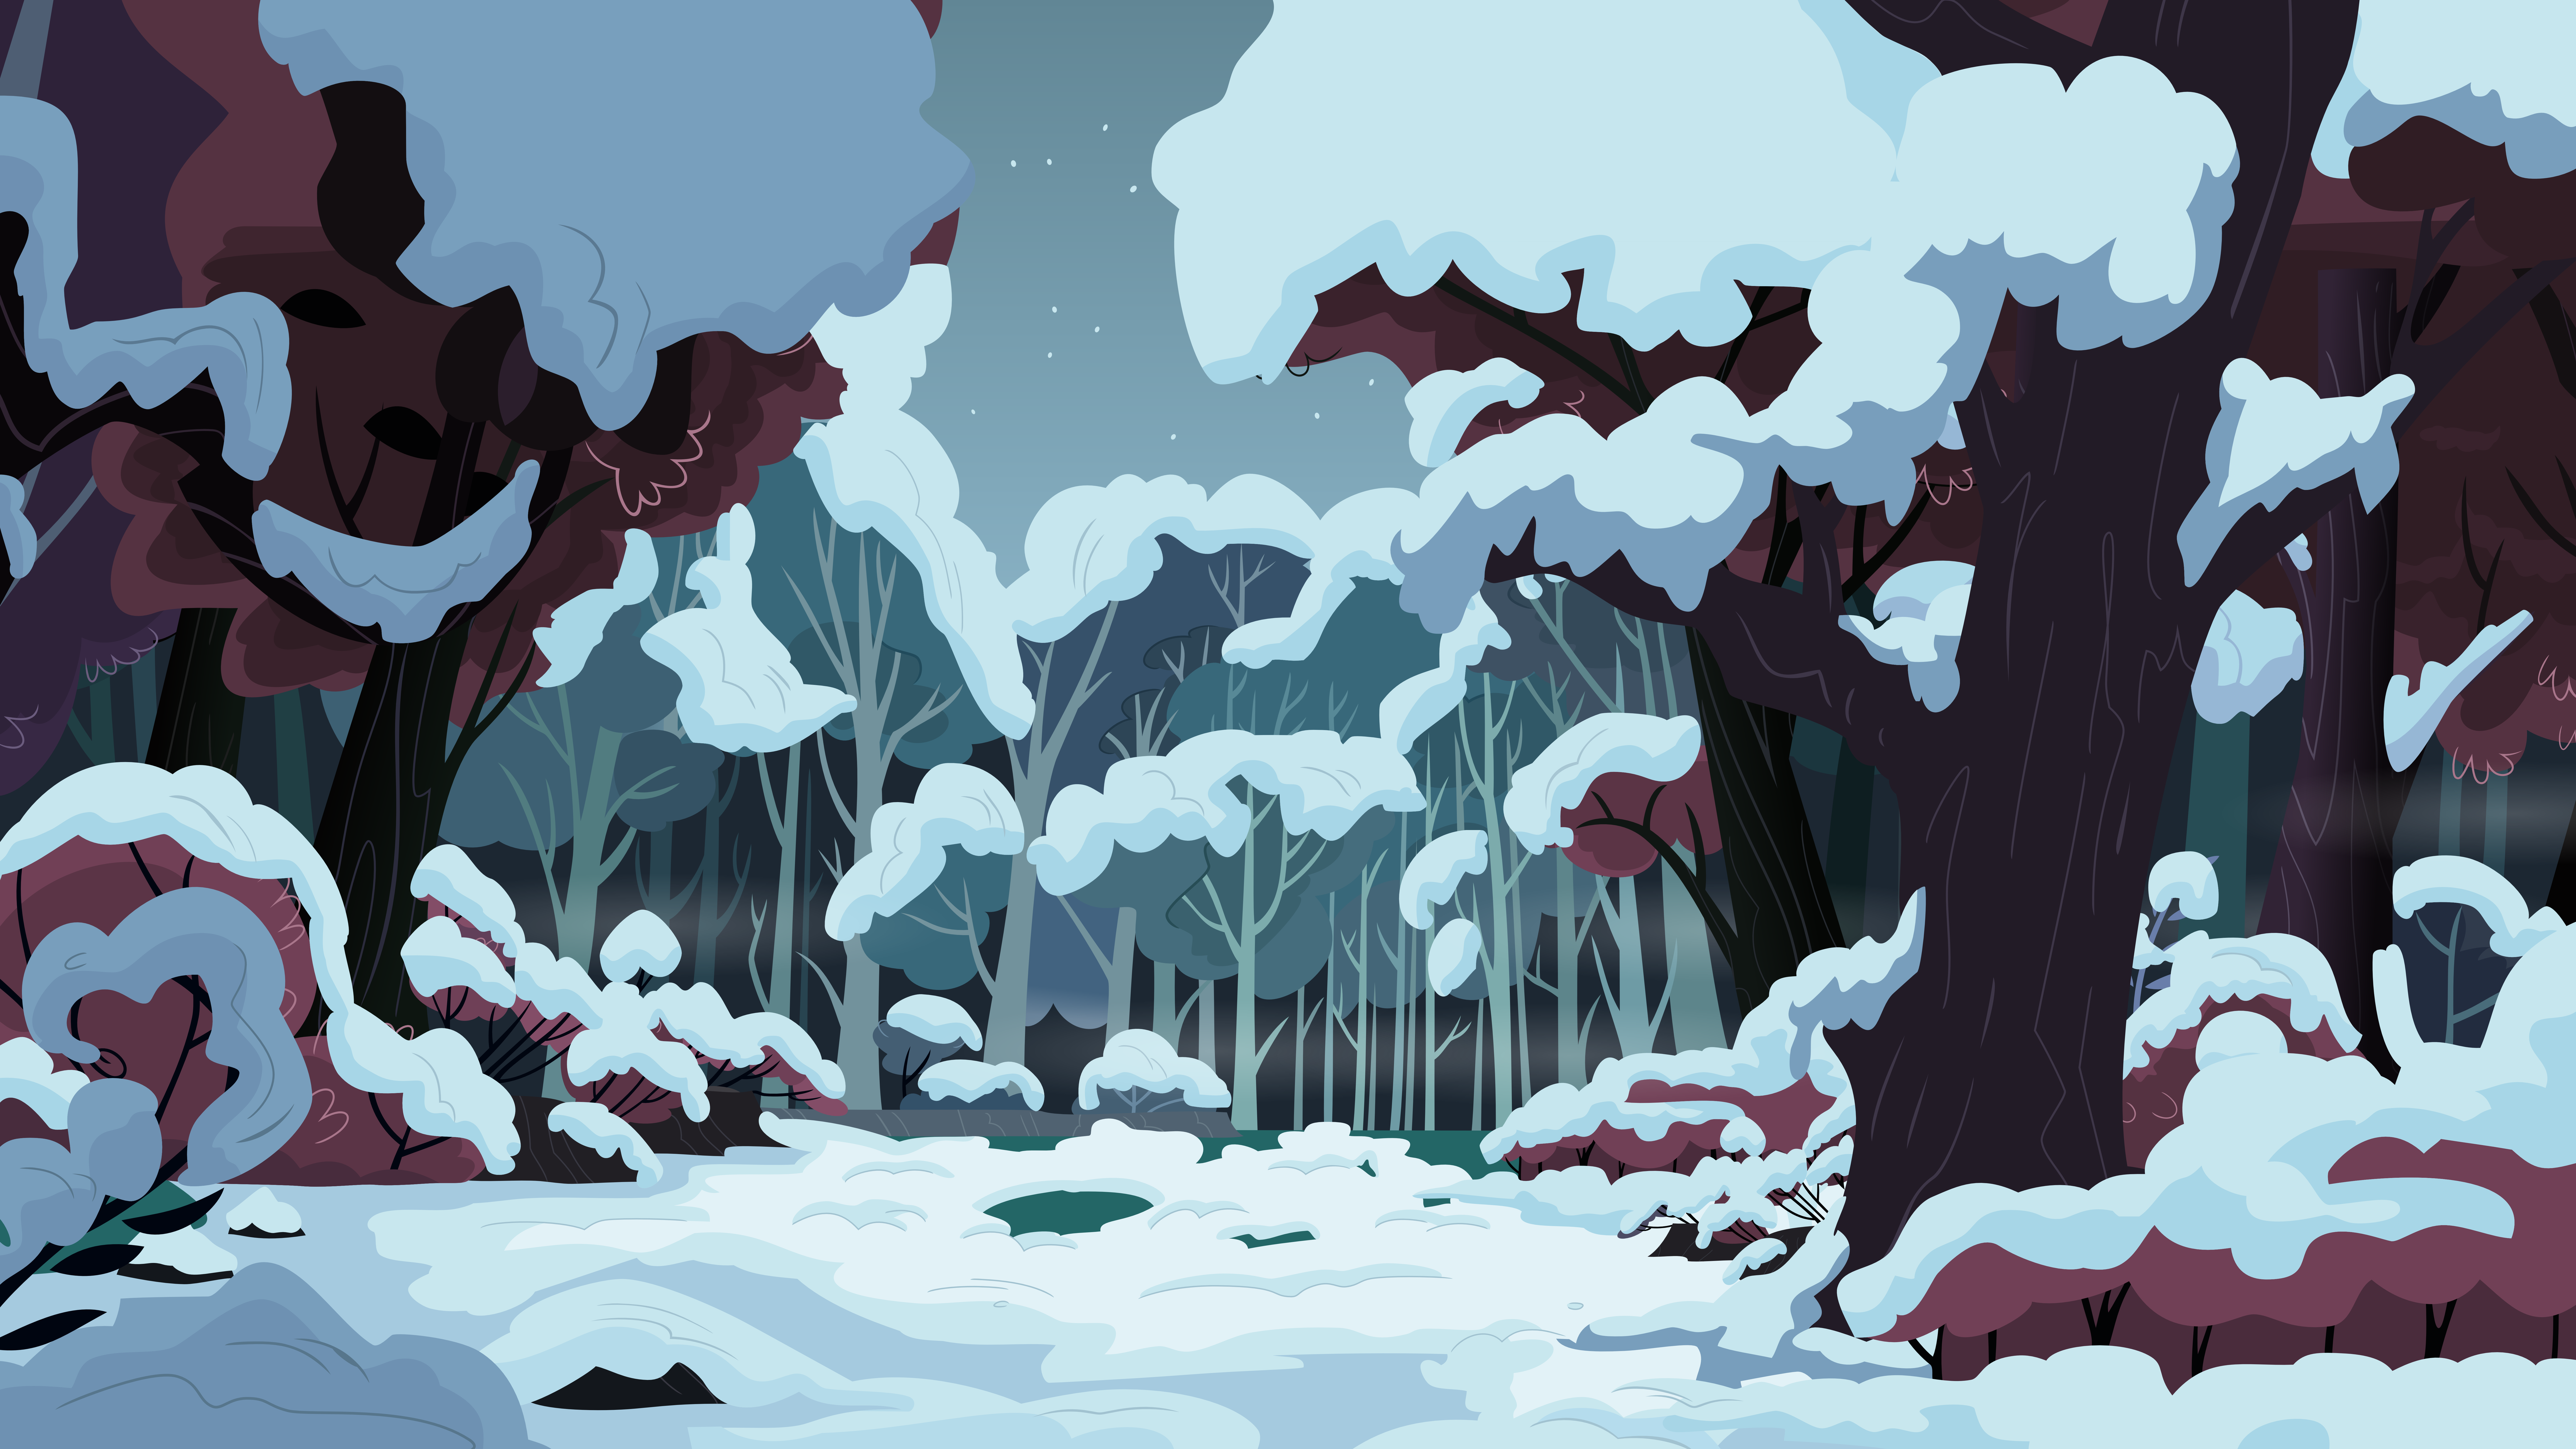 https://derpicdn.net/img/view/2014/1/20/529603__safe_snow_forest_background_winter_hearth%27s+warming+eve_artist-colon-quasdar.png